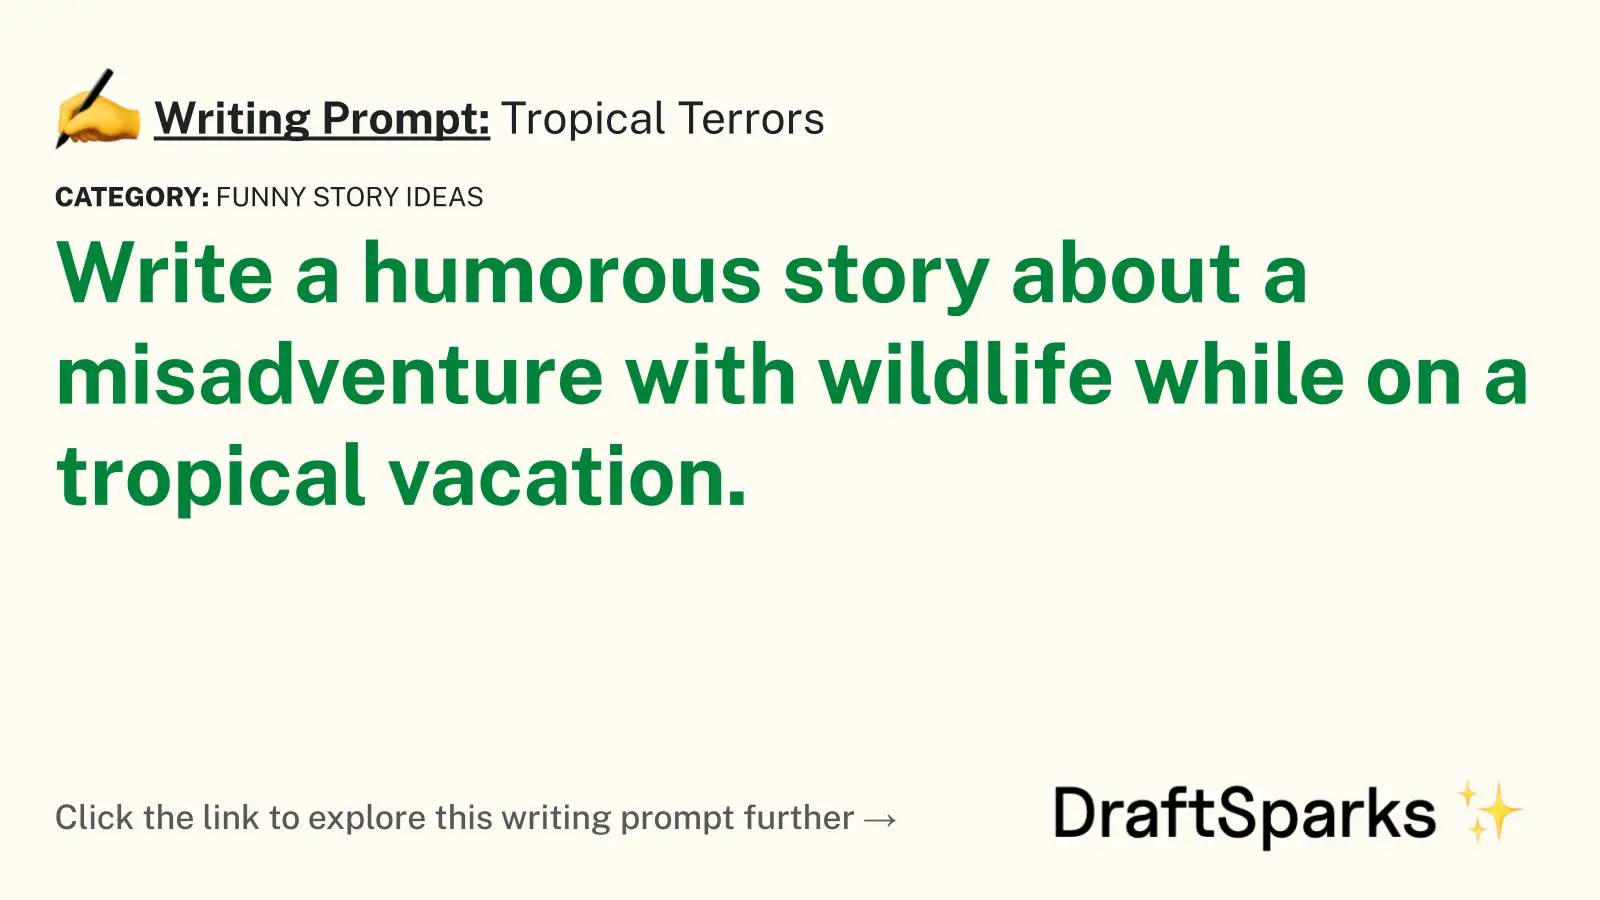 Tropical Terrors